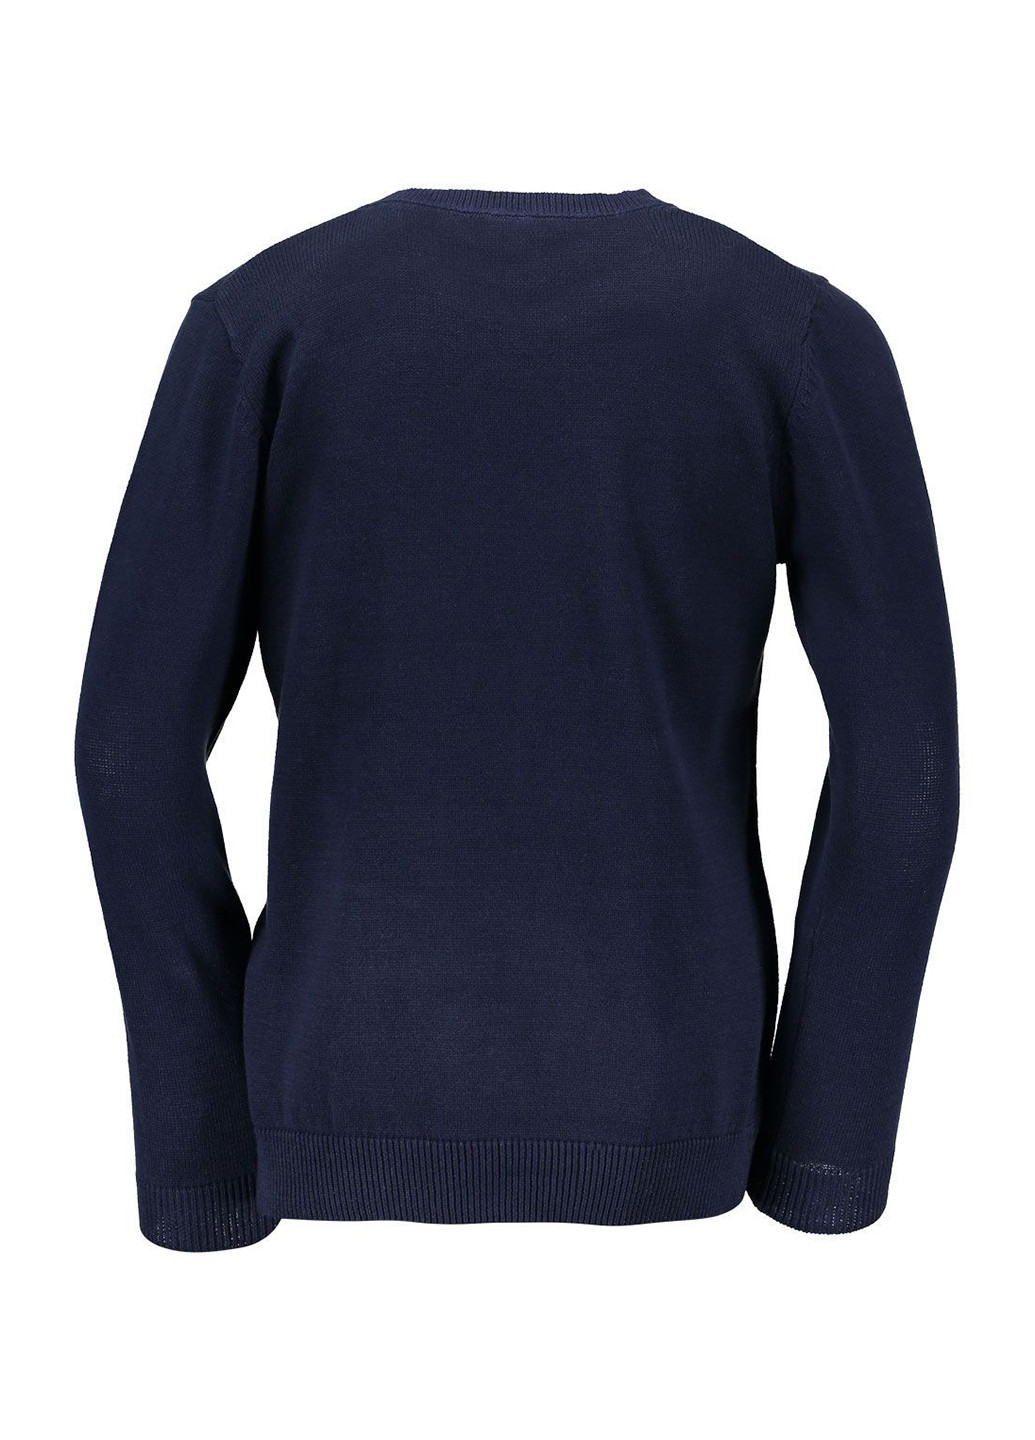 Темно-синий демисезонный пуловер пуловер Piazza Italia